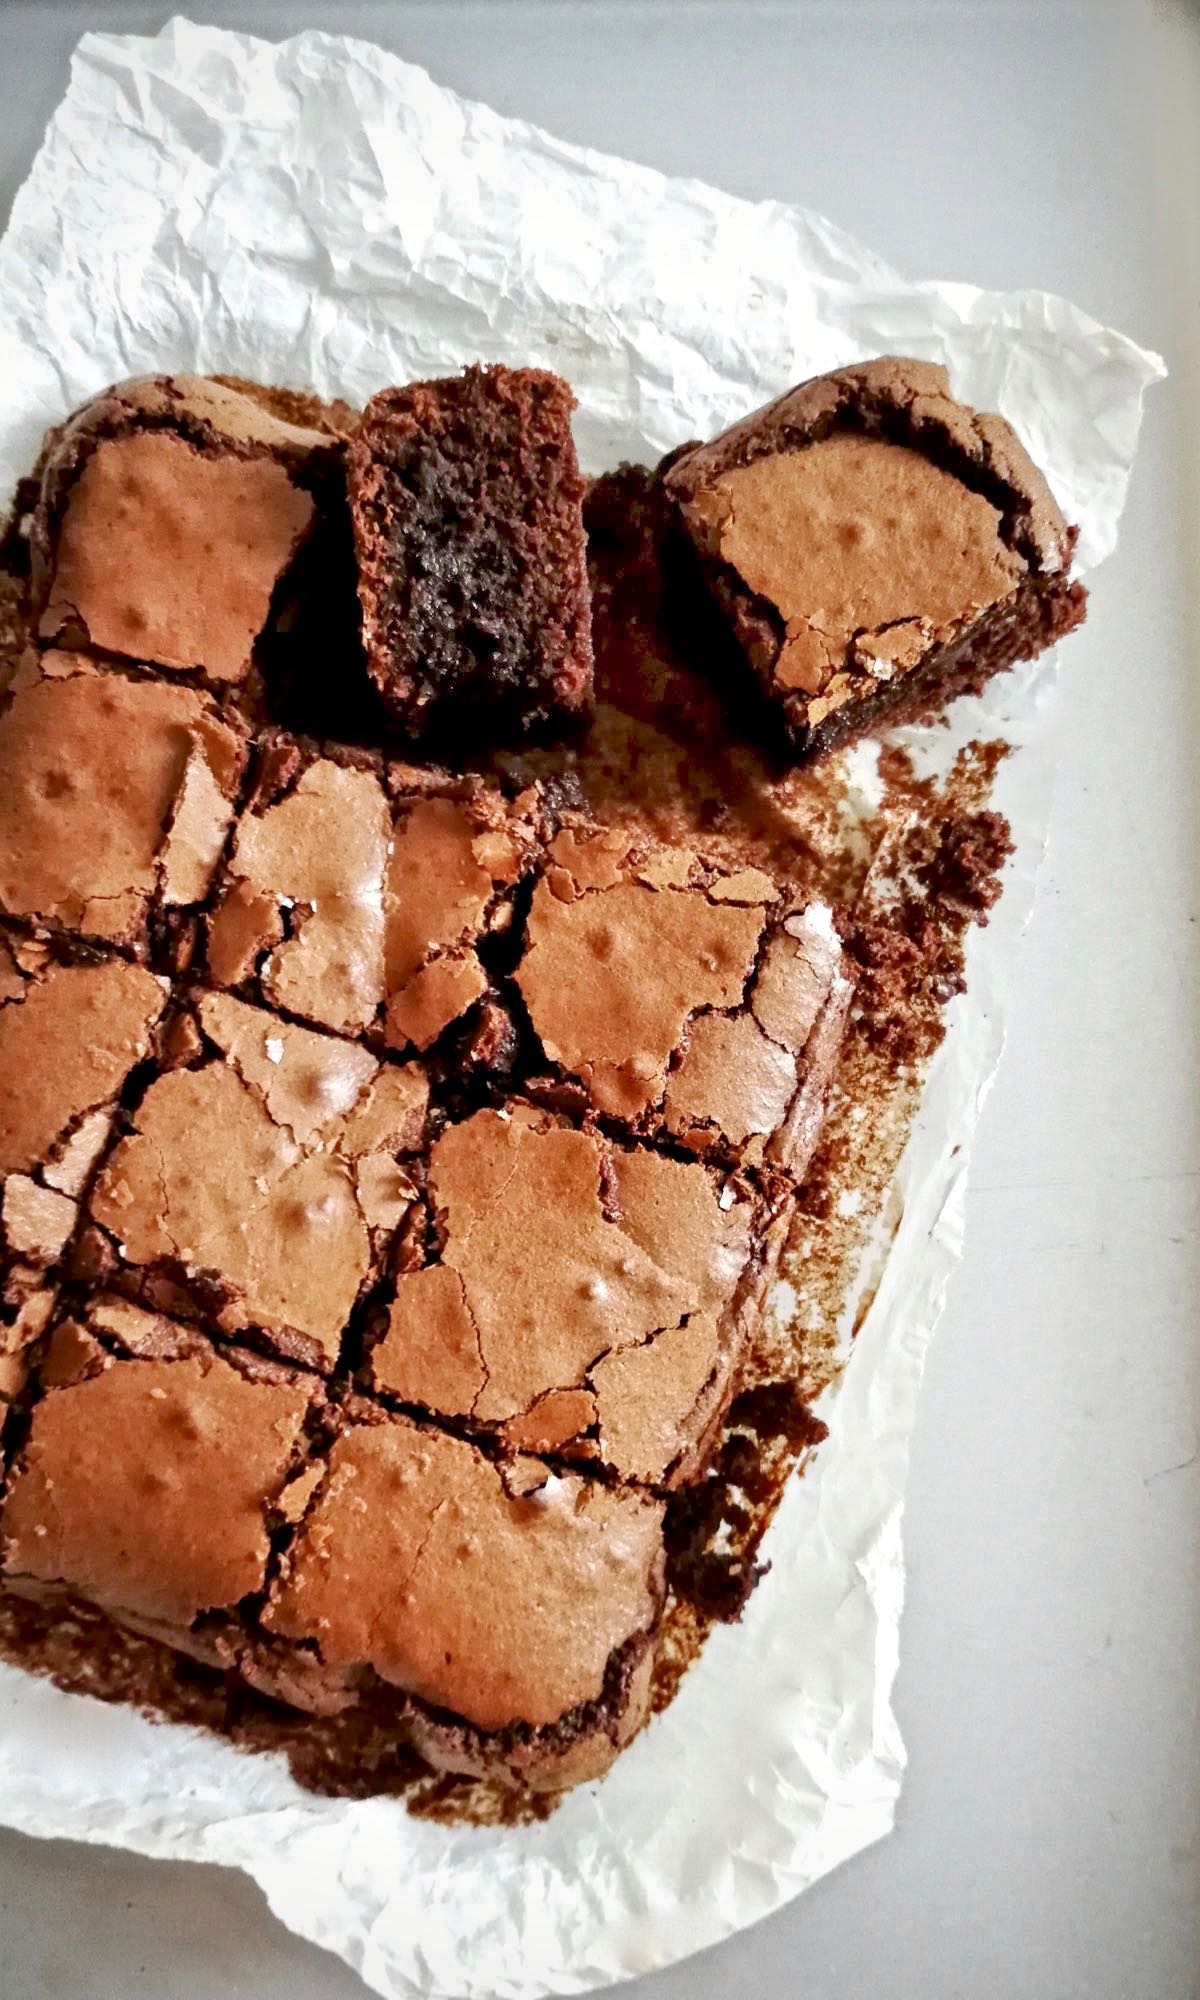 ricetta brownies al cioccolato fondente - dark chocolate brownies recipe - food photography - food styling - opsd blog